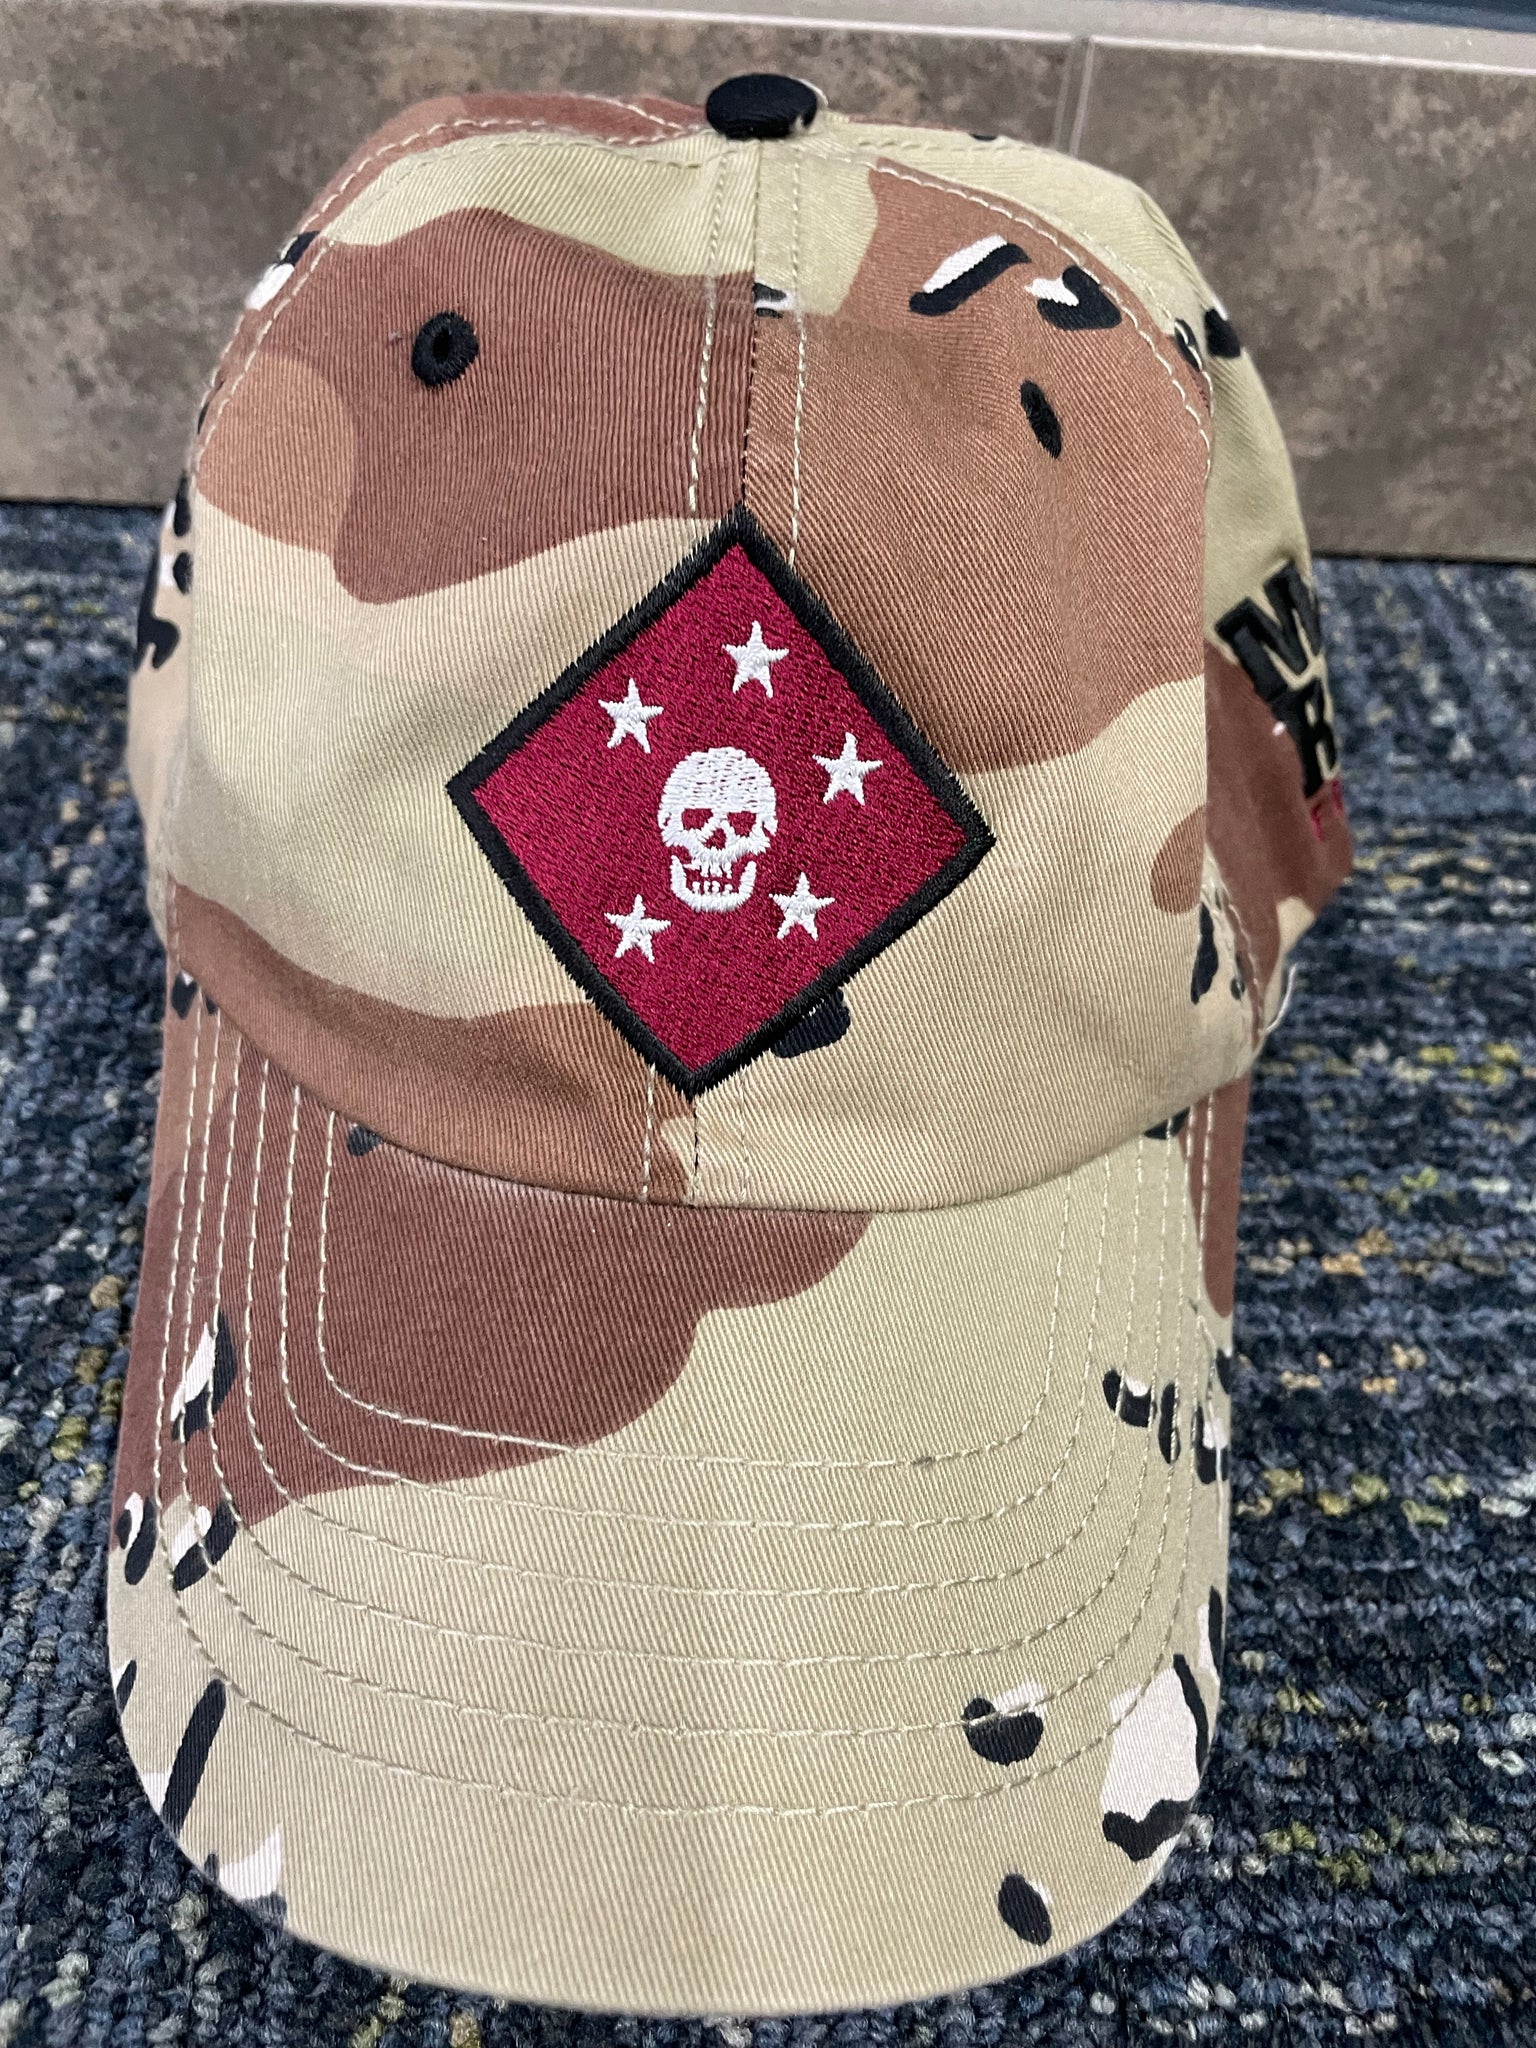 Marsoc Foundation hat with Raider logo